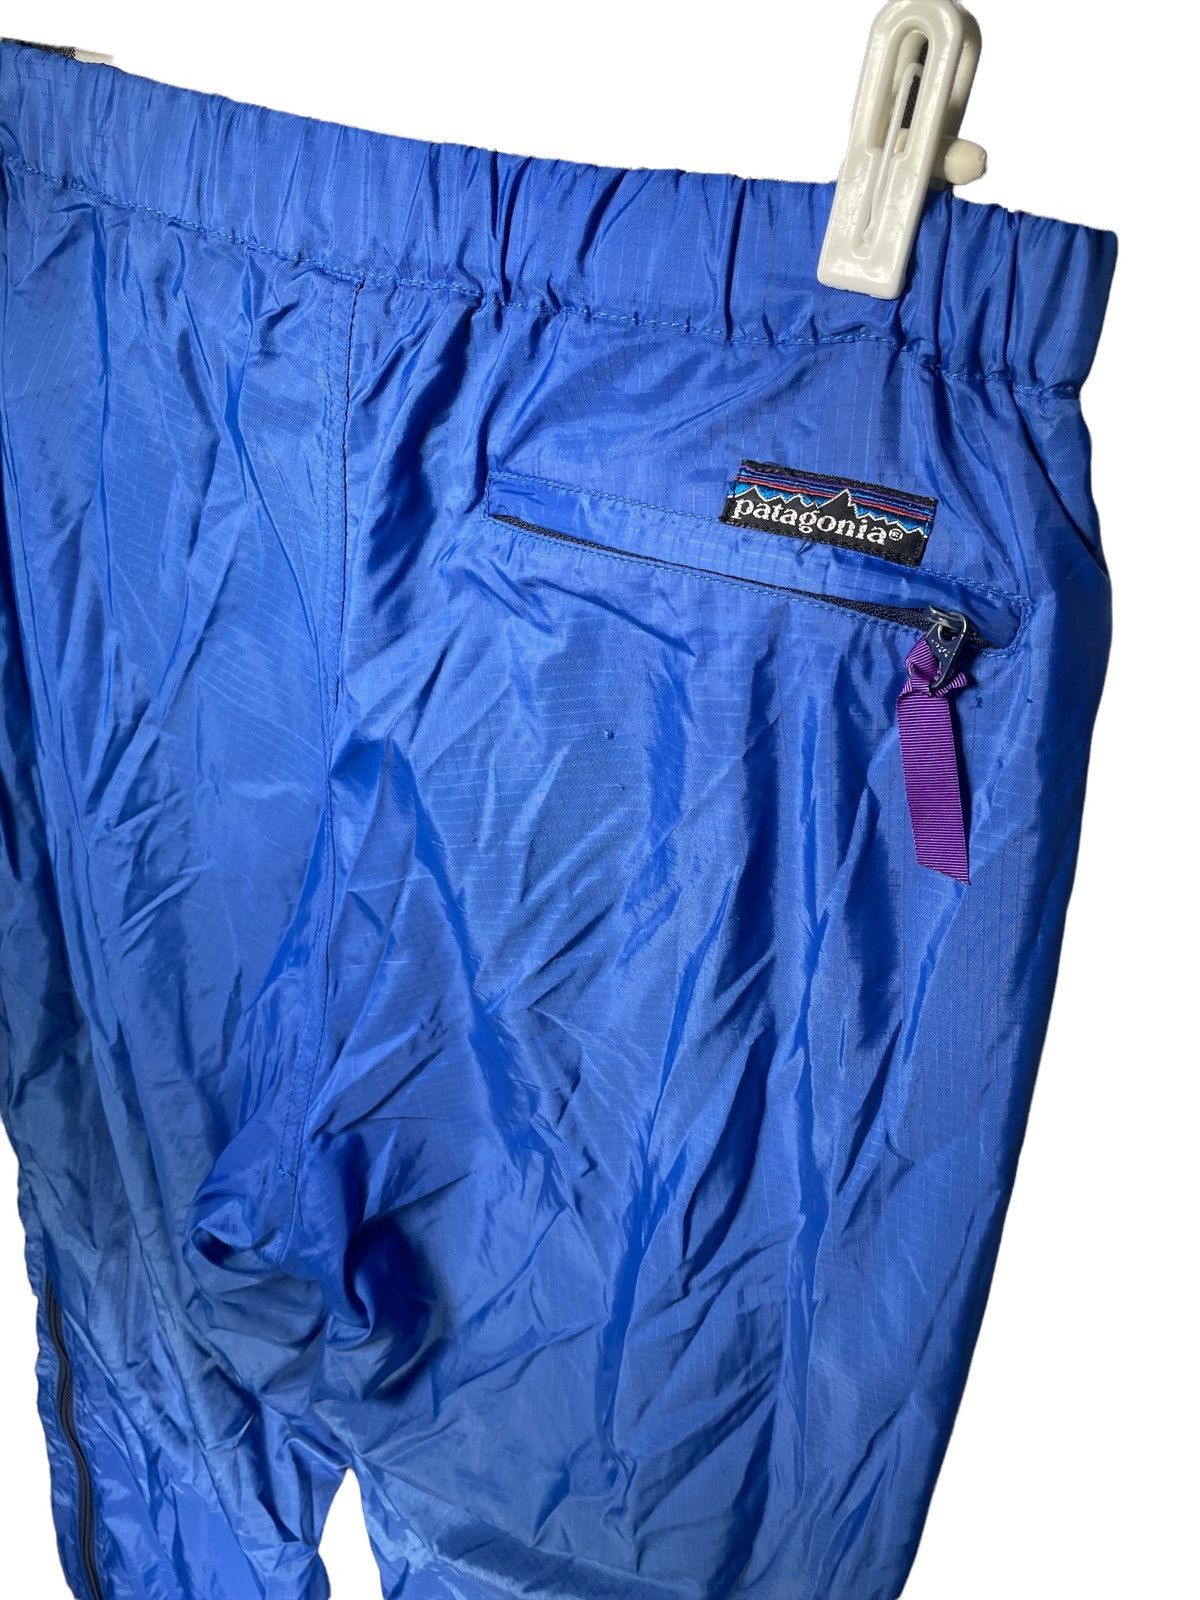 Vintage Patagonia nylon pants | Grailed